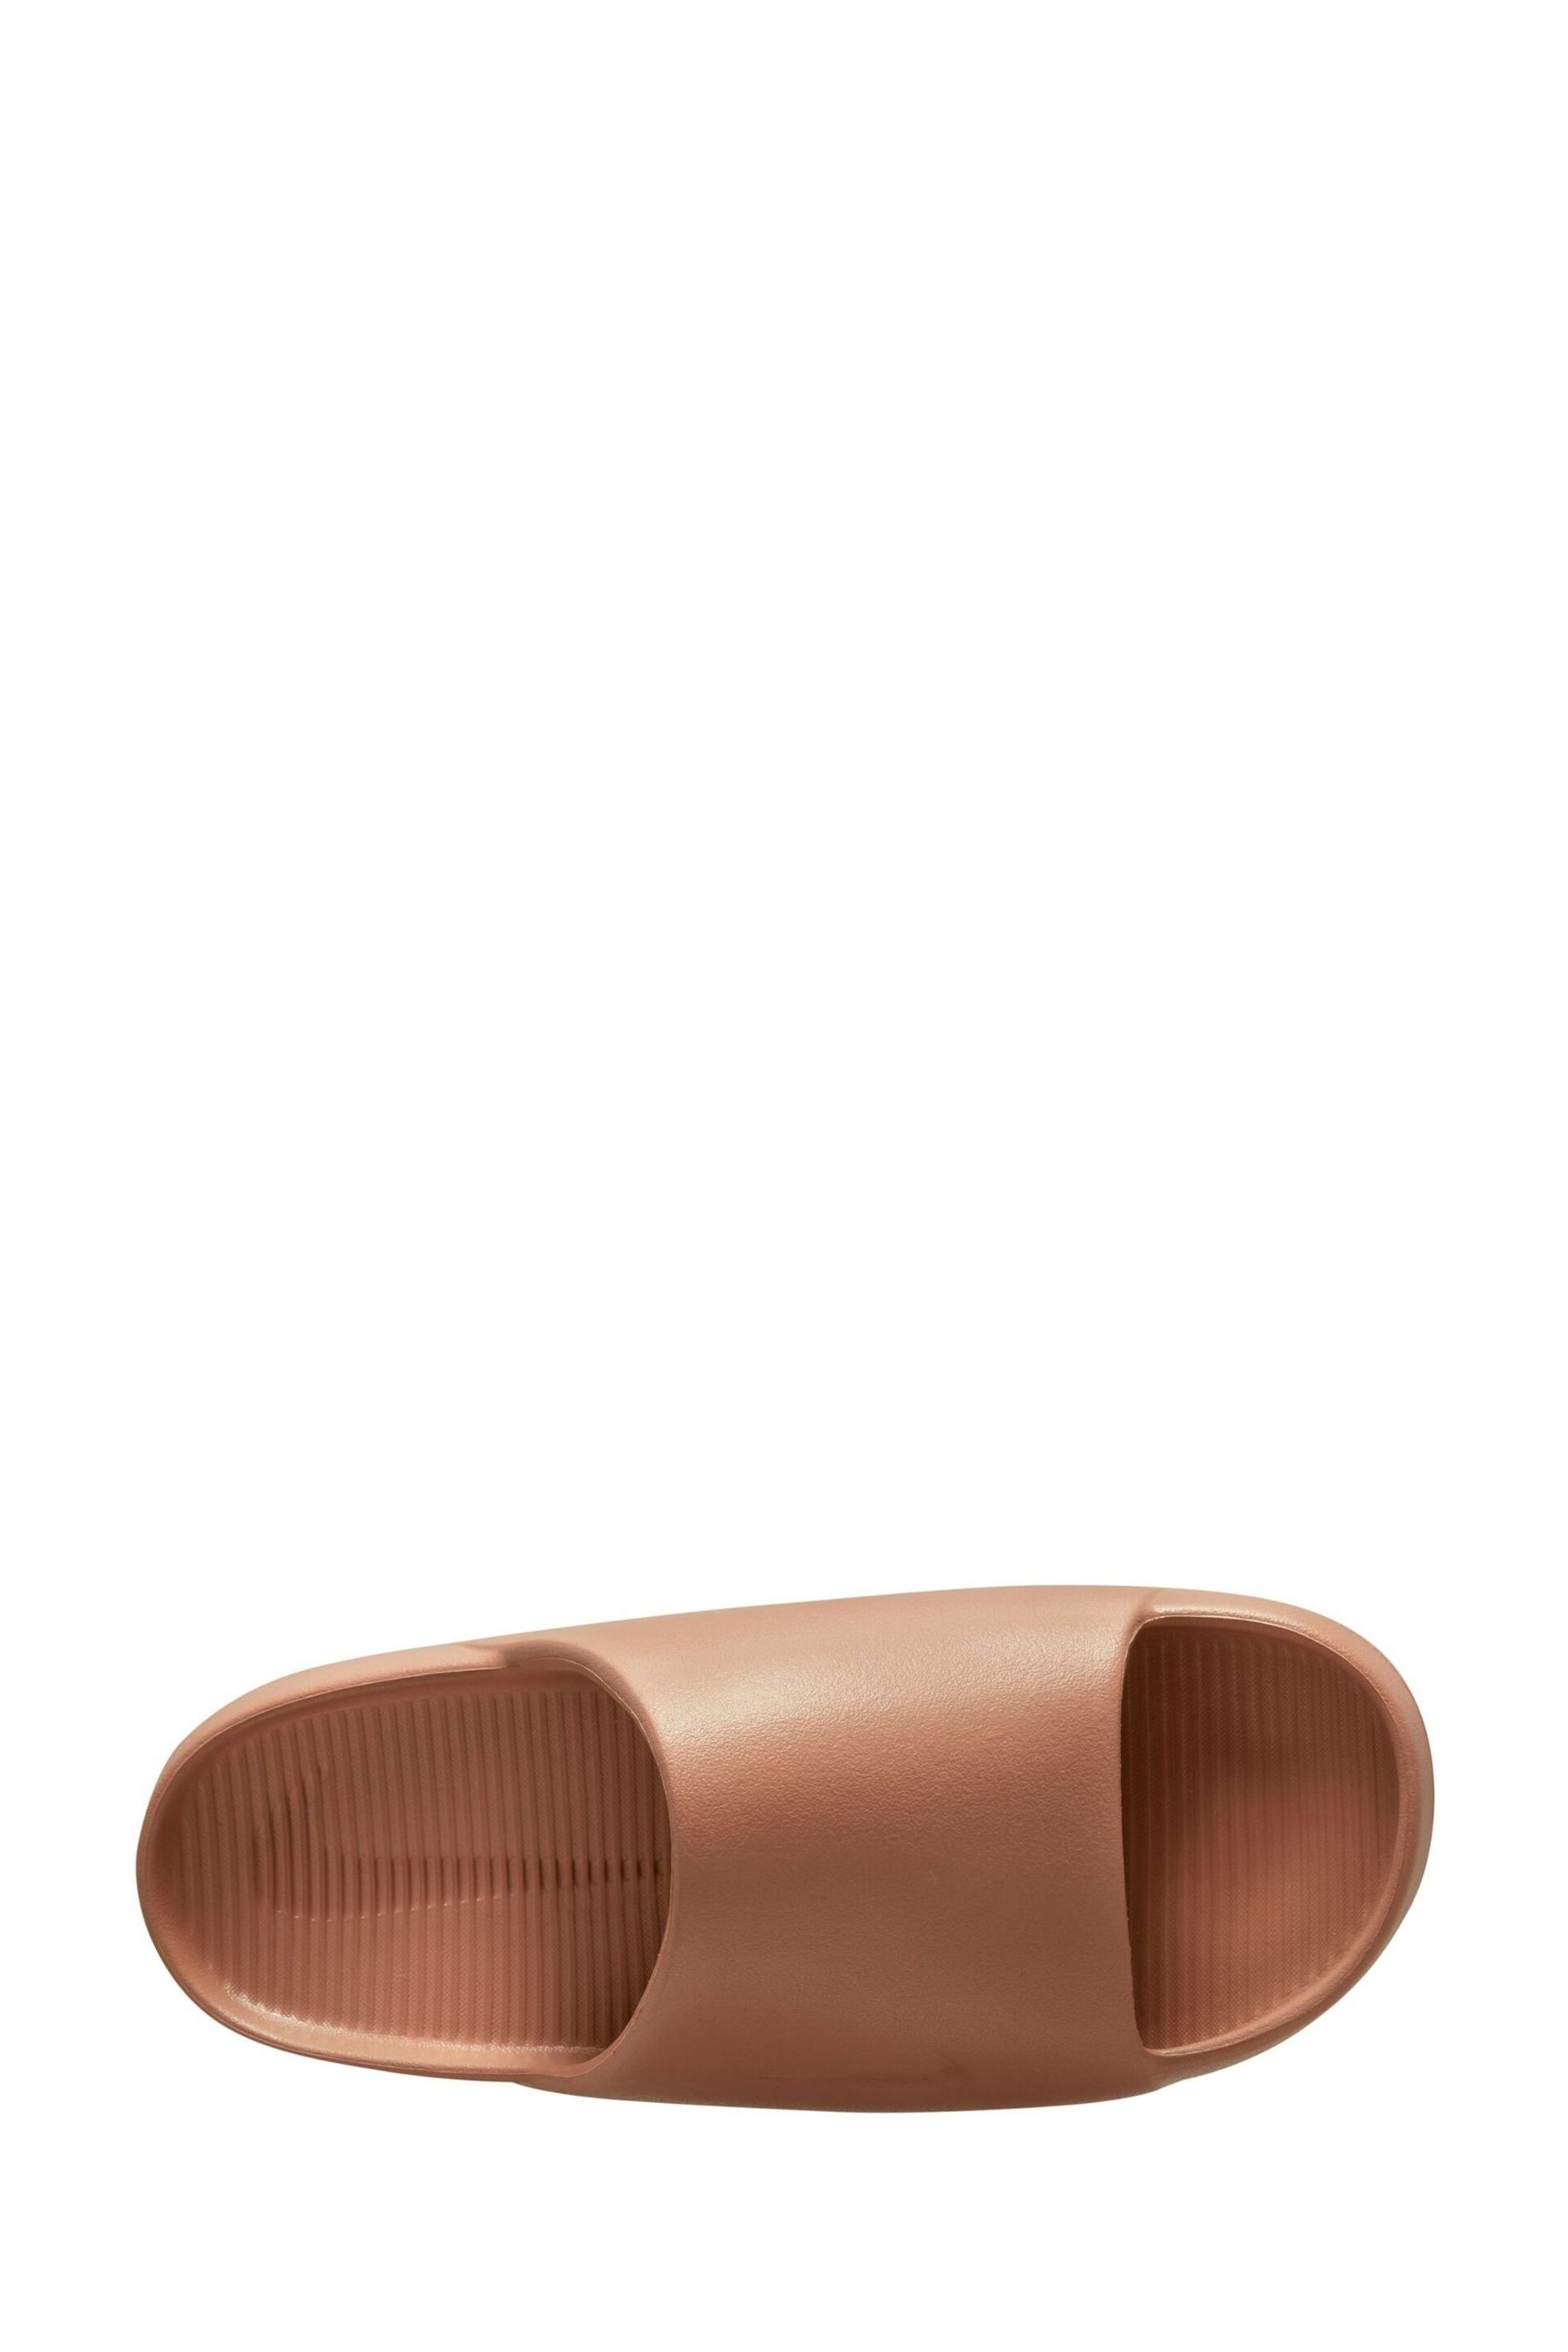 Nike Brown Calm Sliders - Image 4 of 6